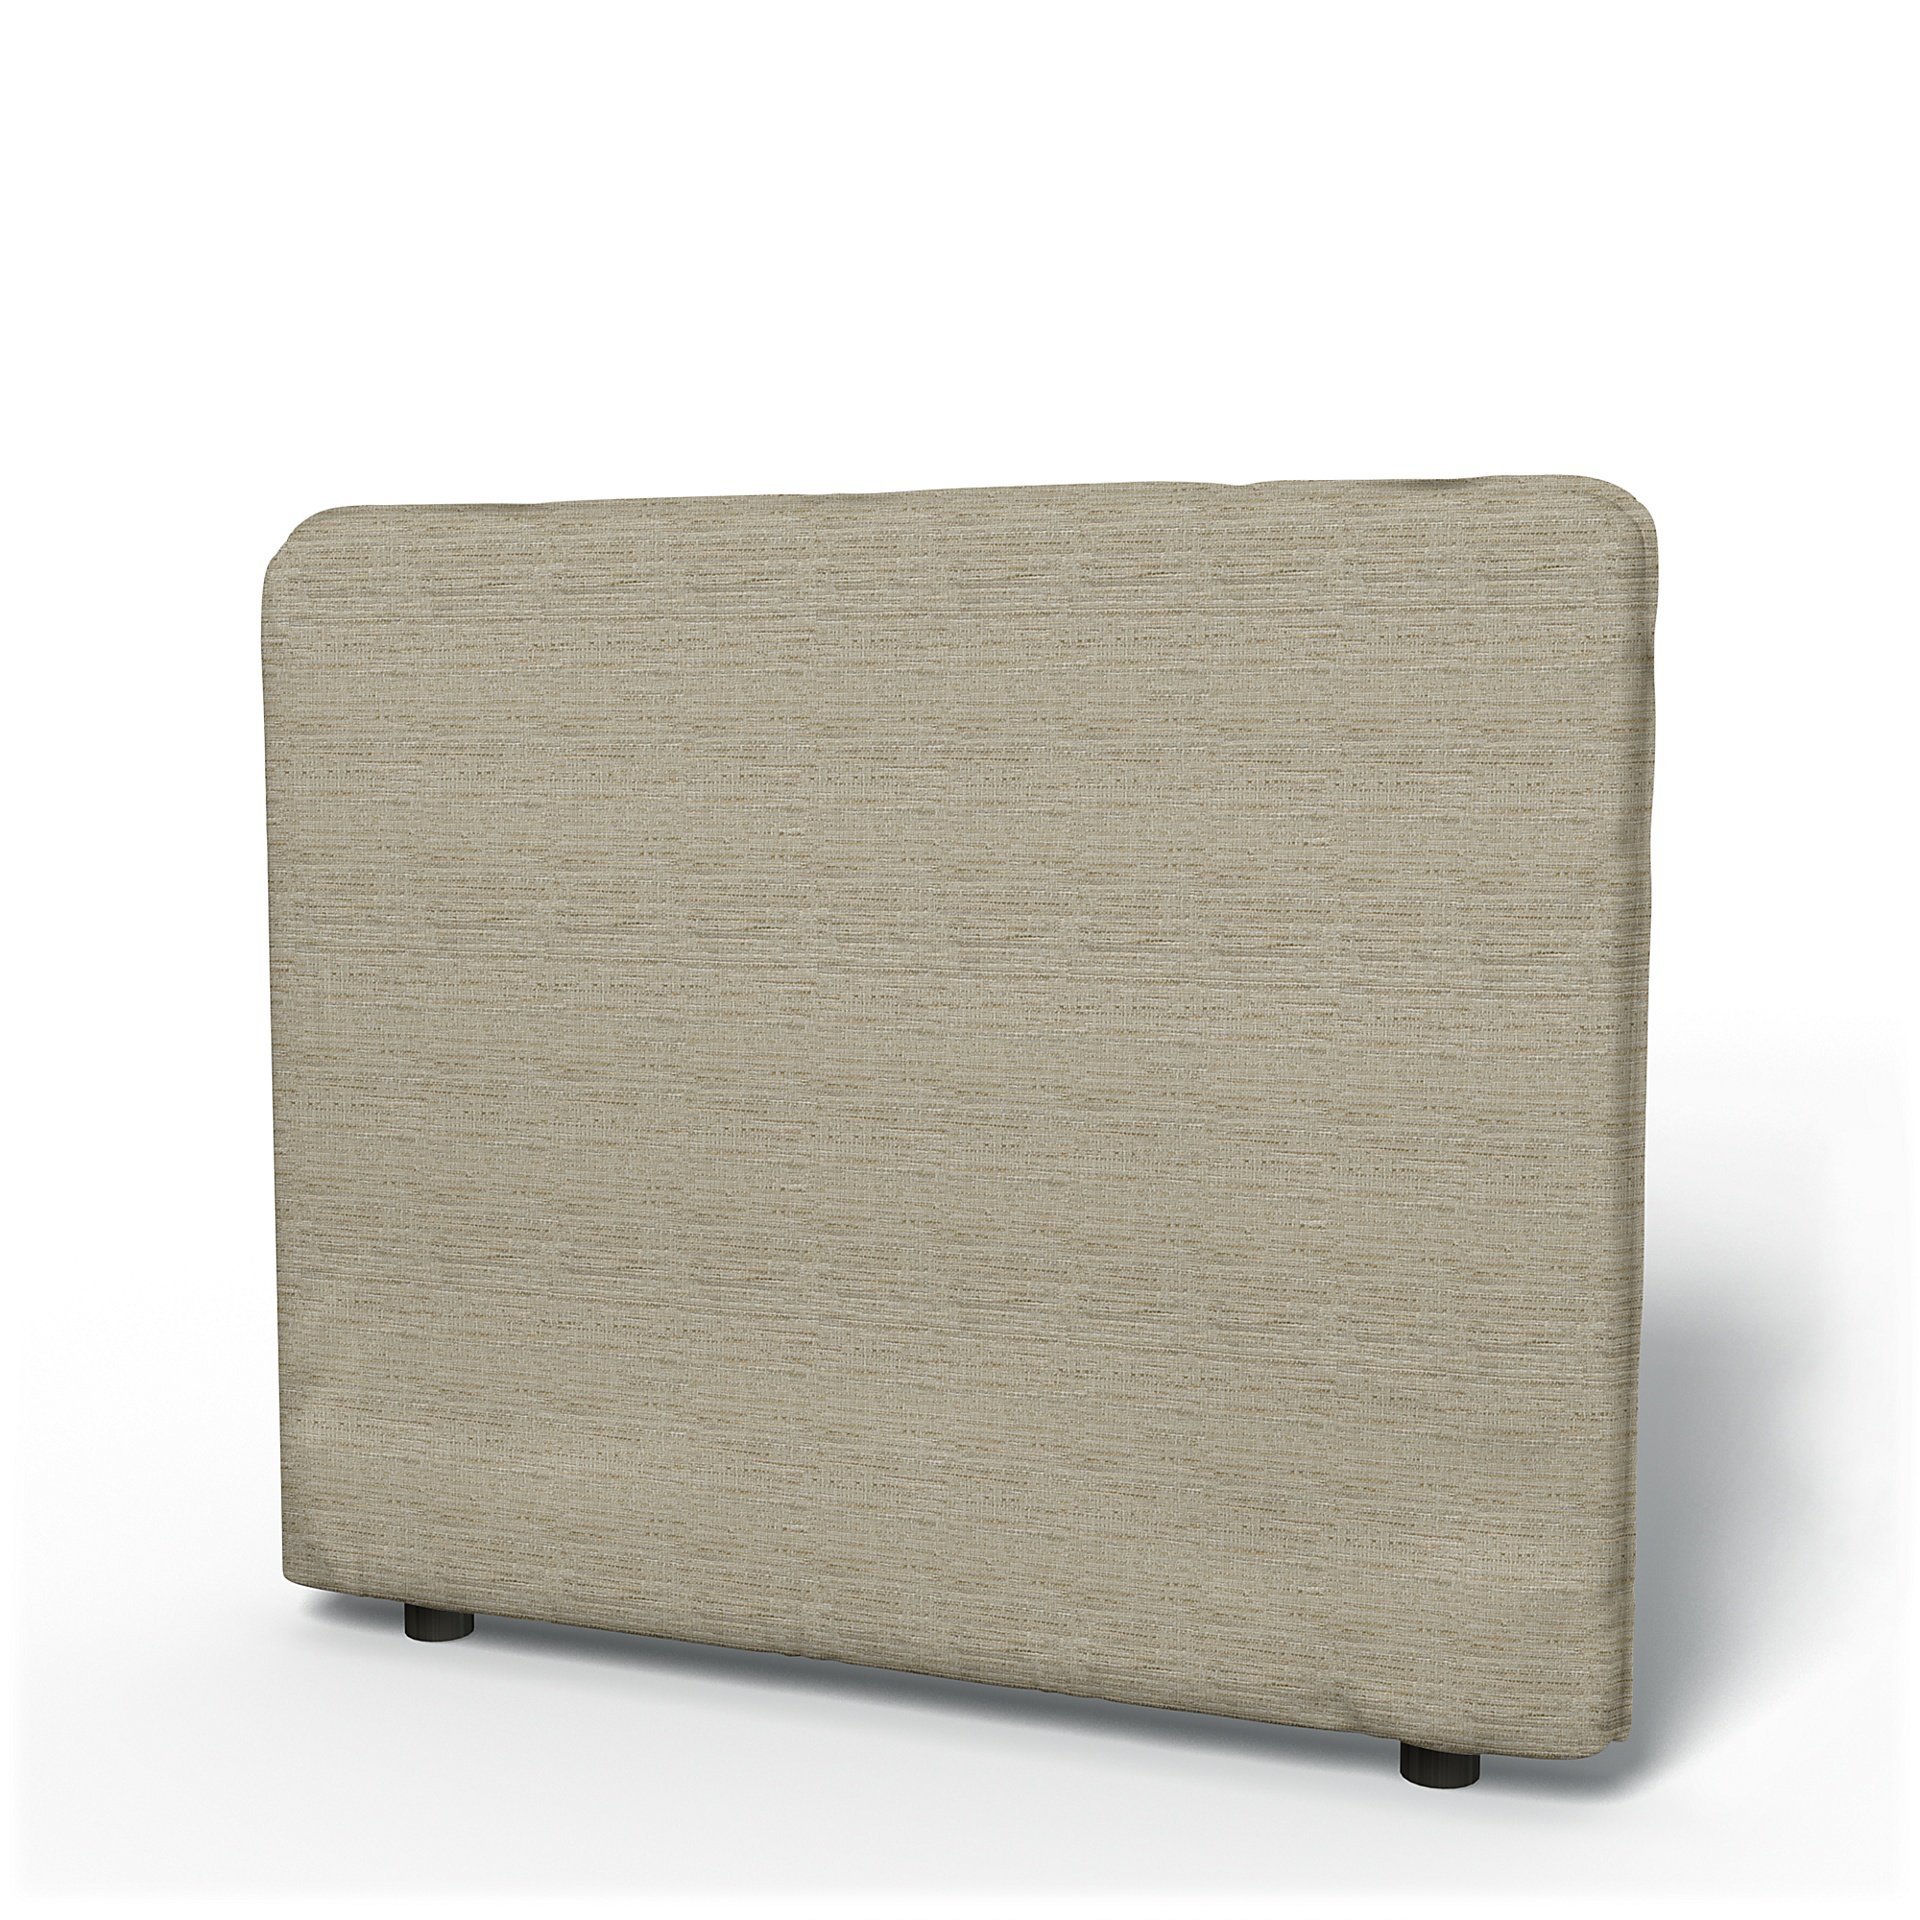 IKEA - Vallentuna Low Backrest Cover 100x80cm 39x32in, Light Sand, Boucle & Texture - Bemz